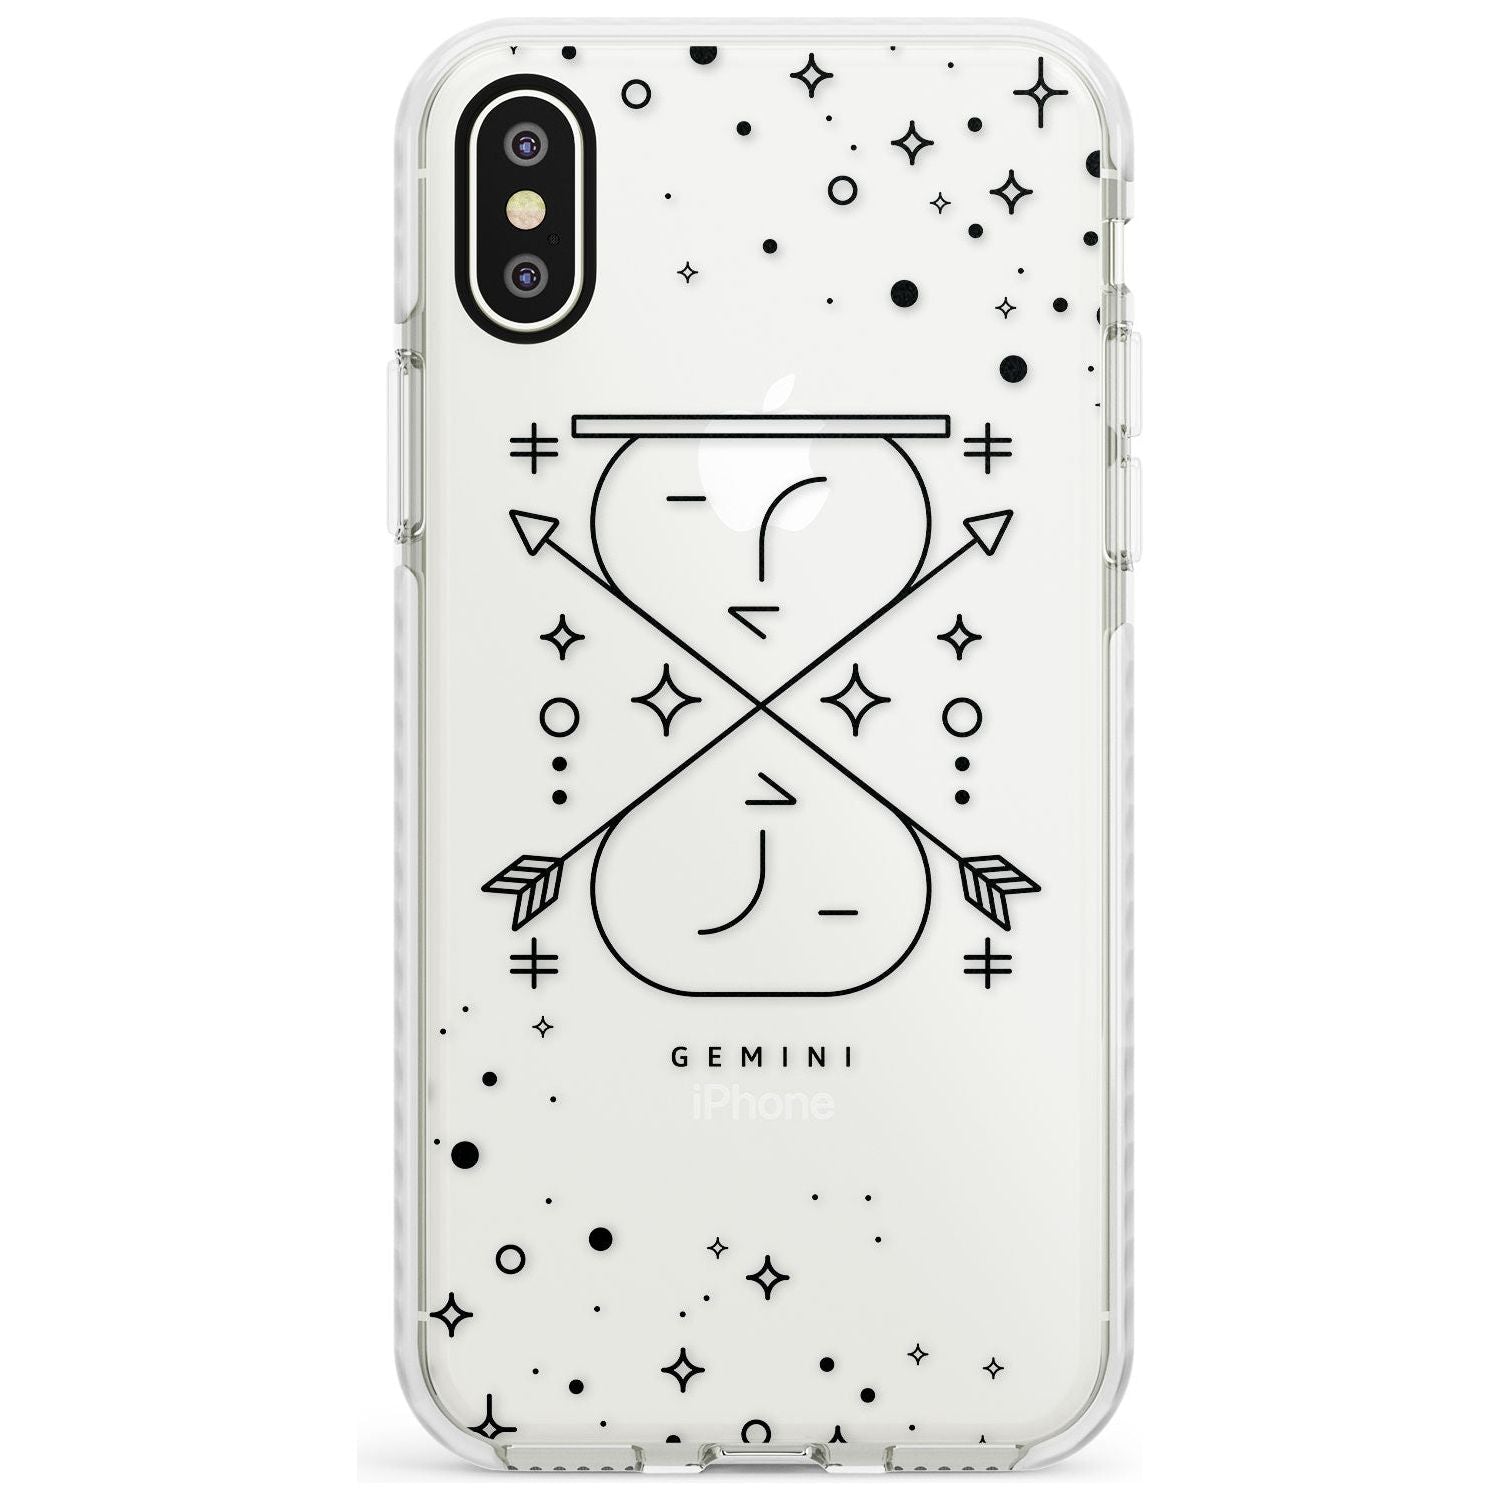 Gemini Emblem - Transparent Design Impact Phone Case for iPhone X XS Max XR